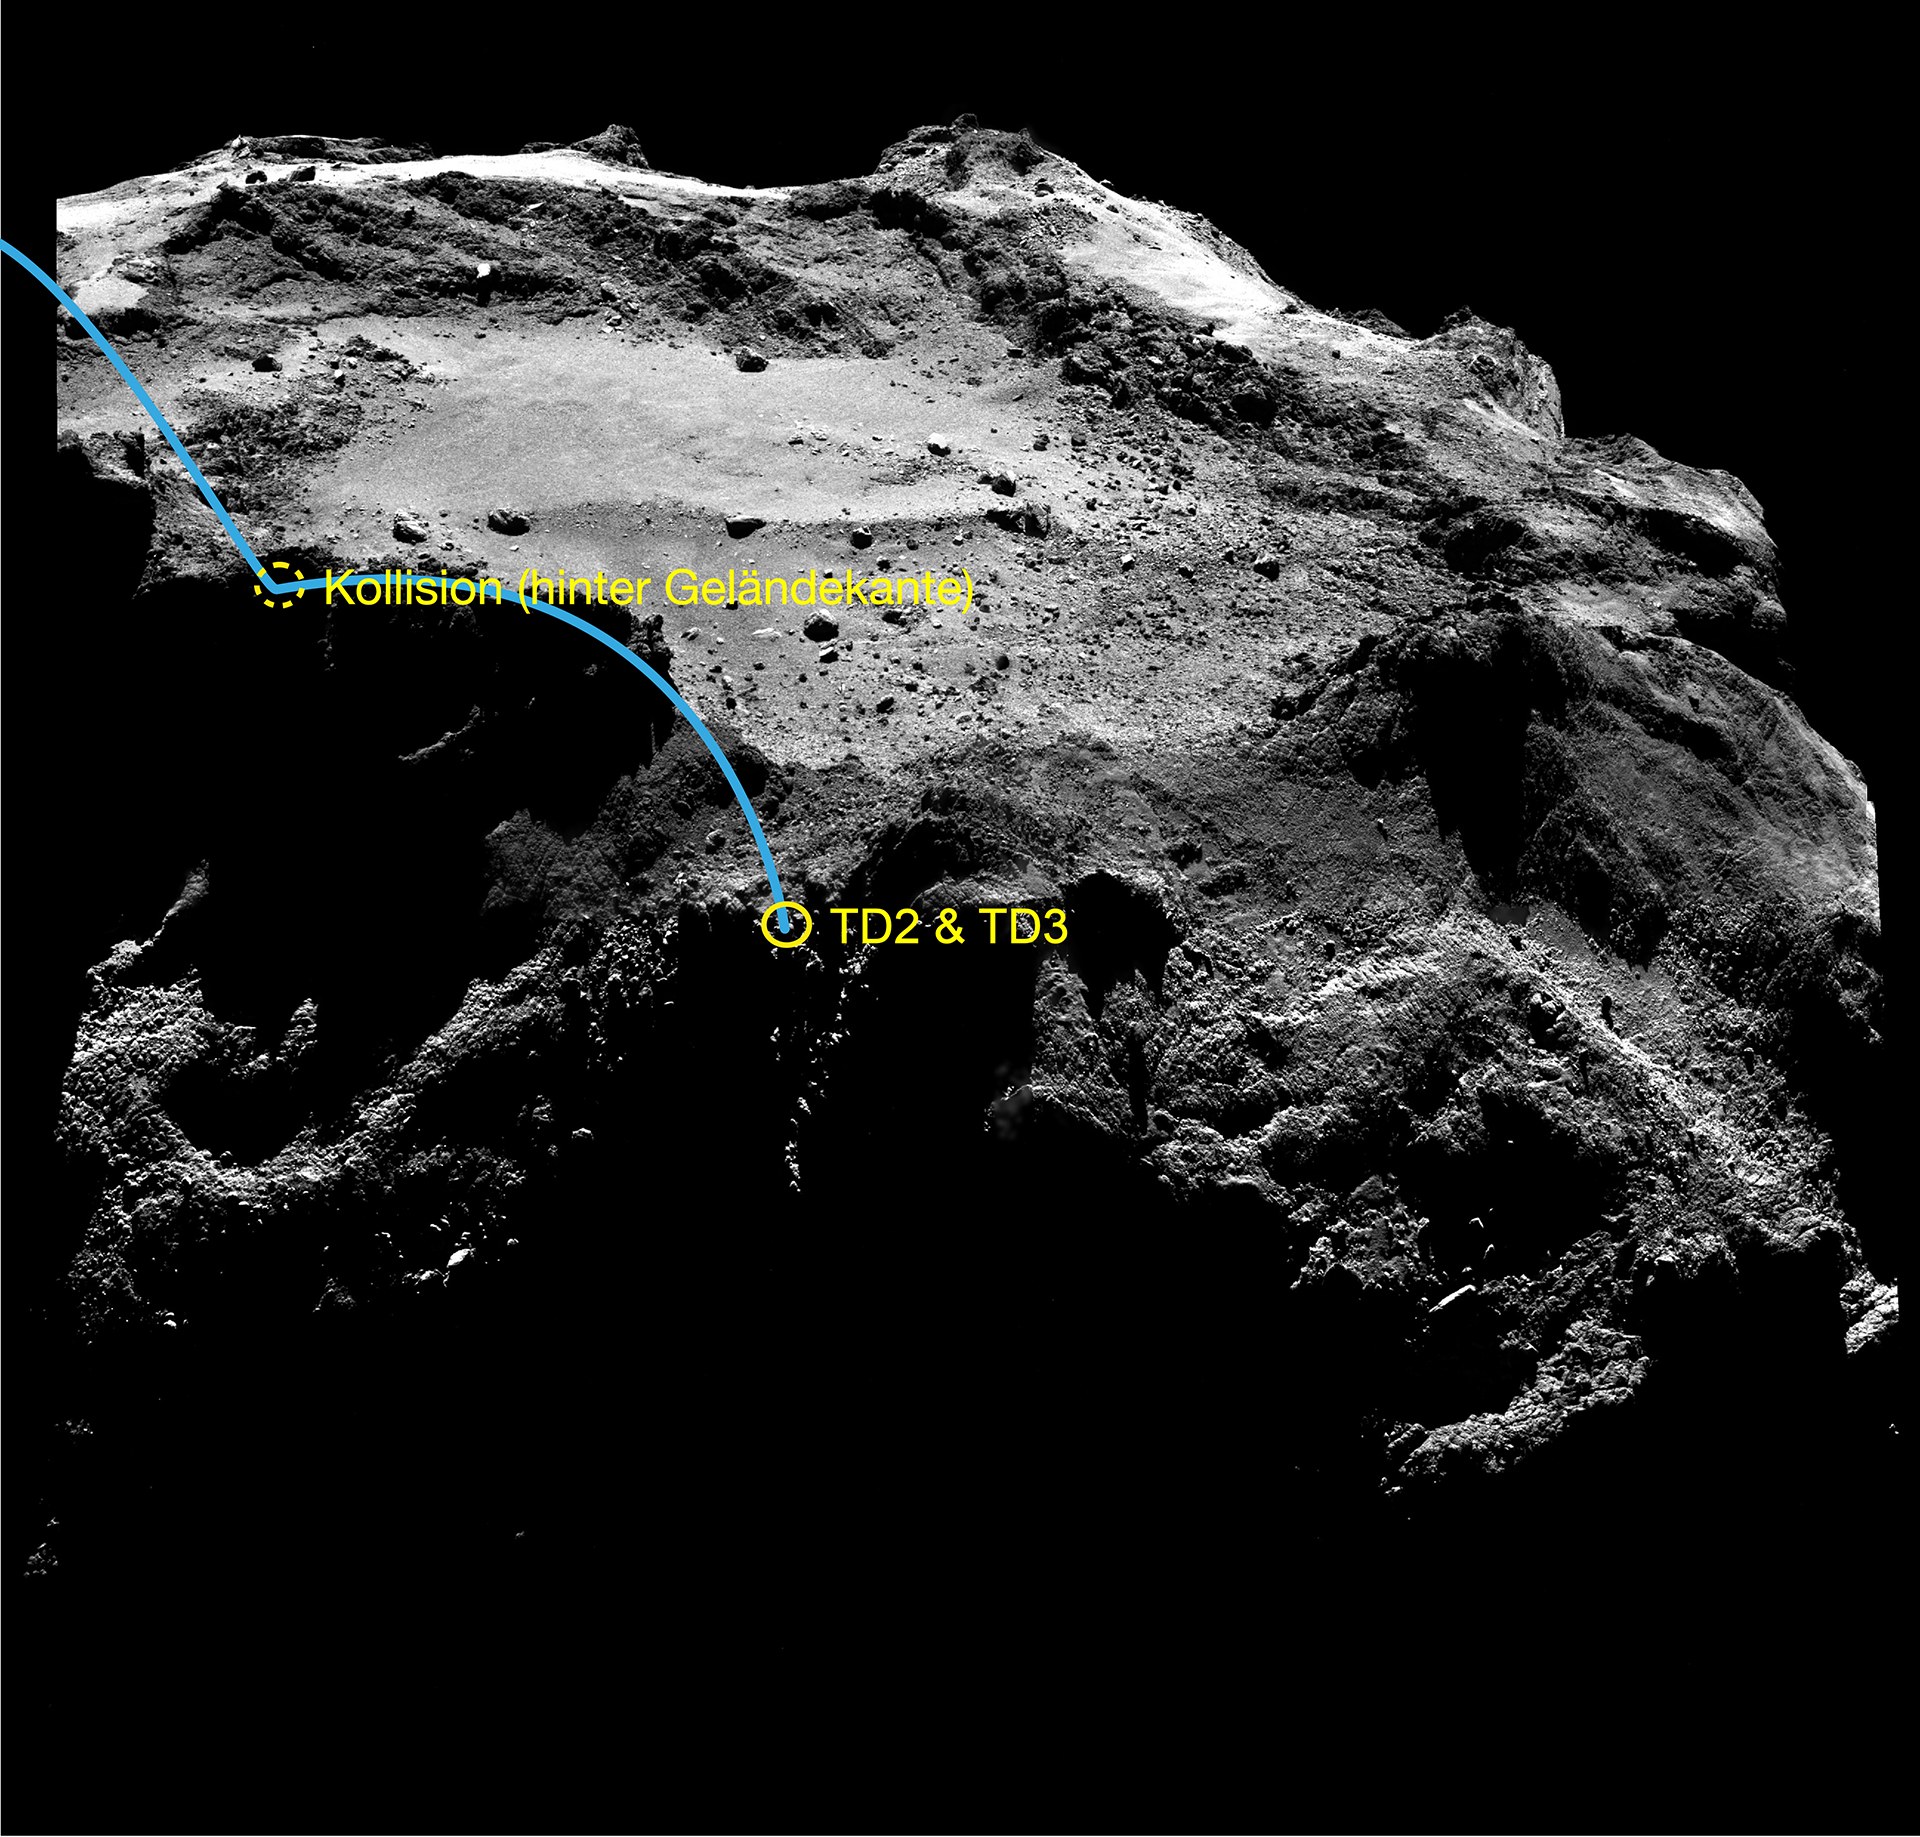 Philae’s path on comet 67P